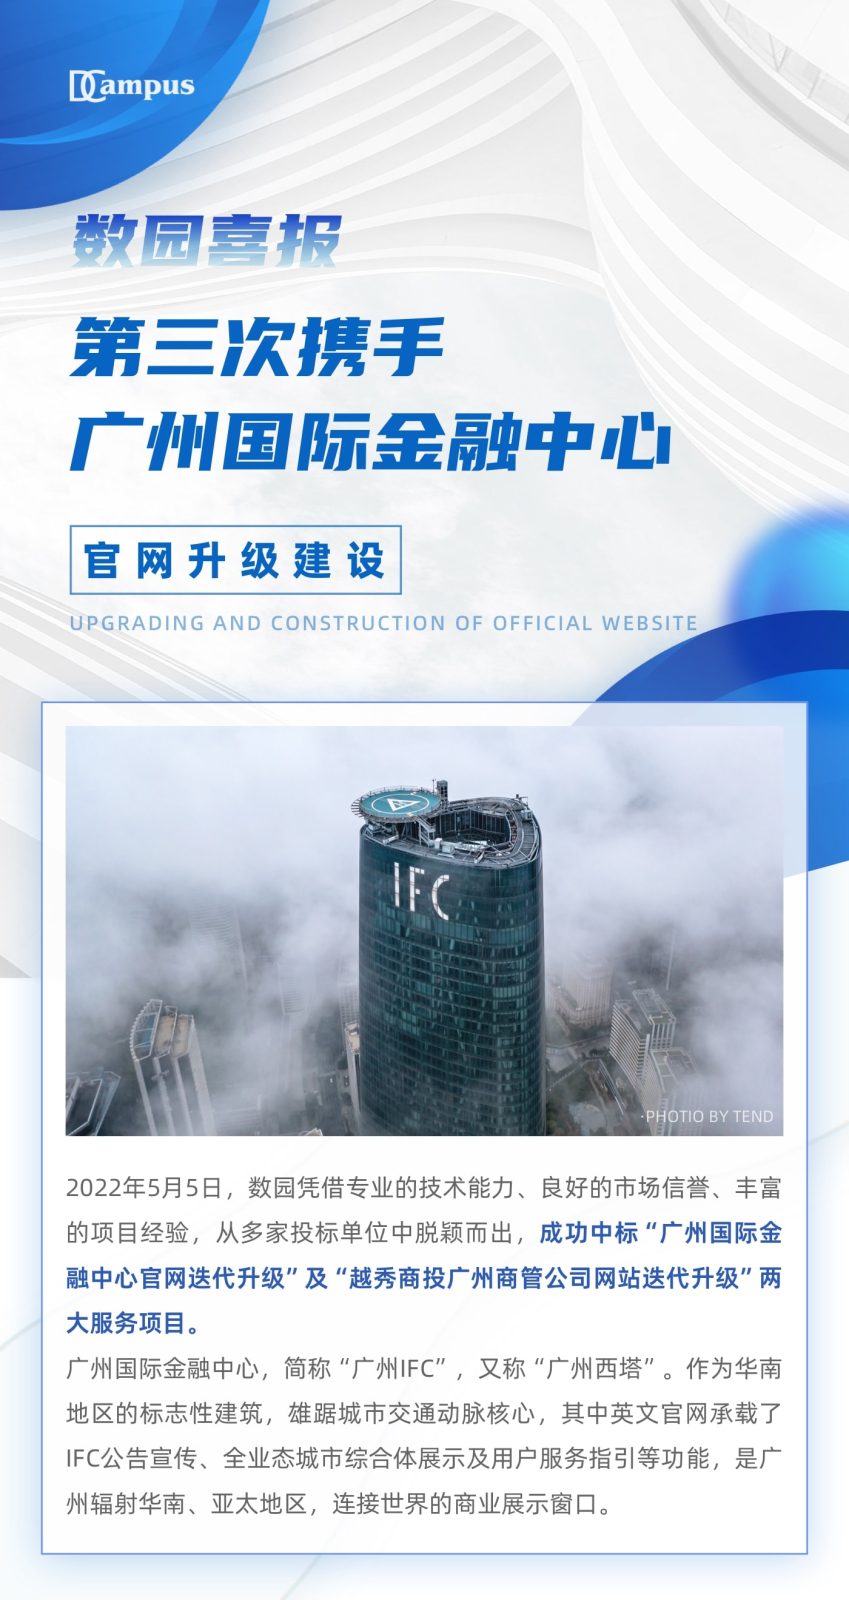 ifc 广州国际金融中心 品牌升级 官网上线 数园网络